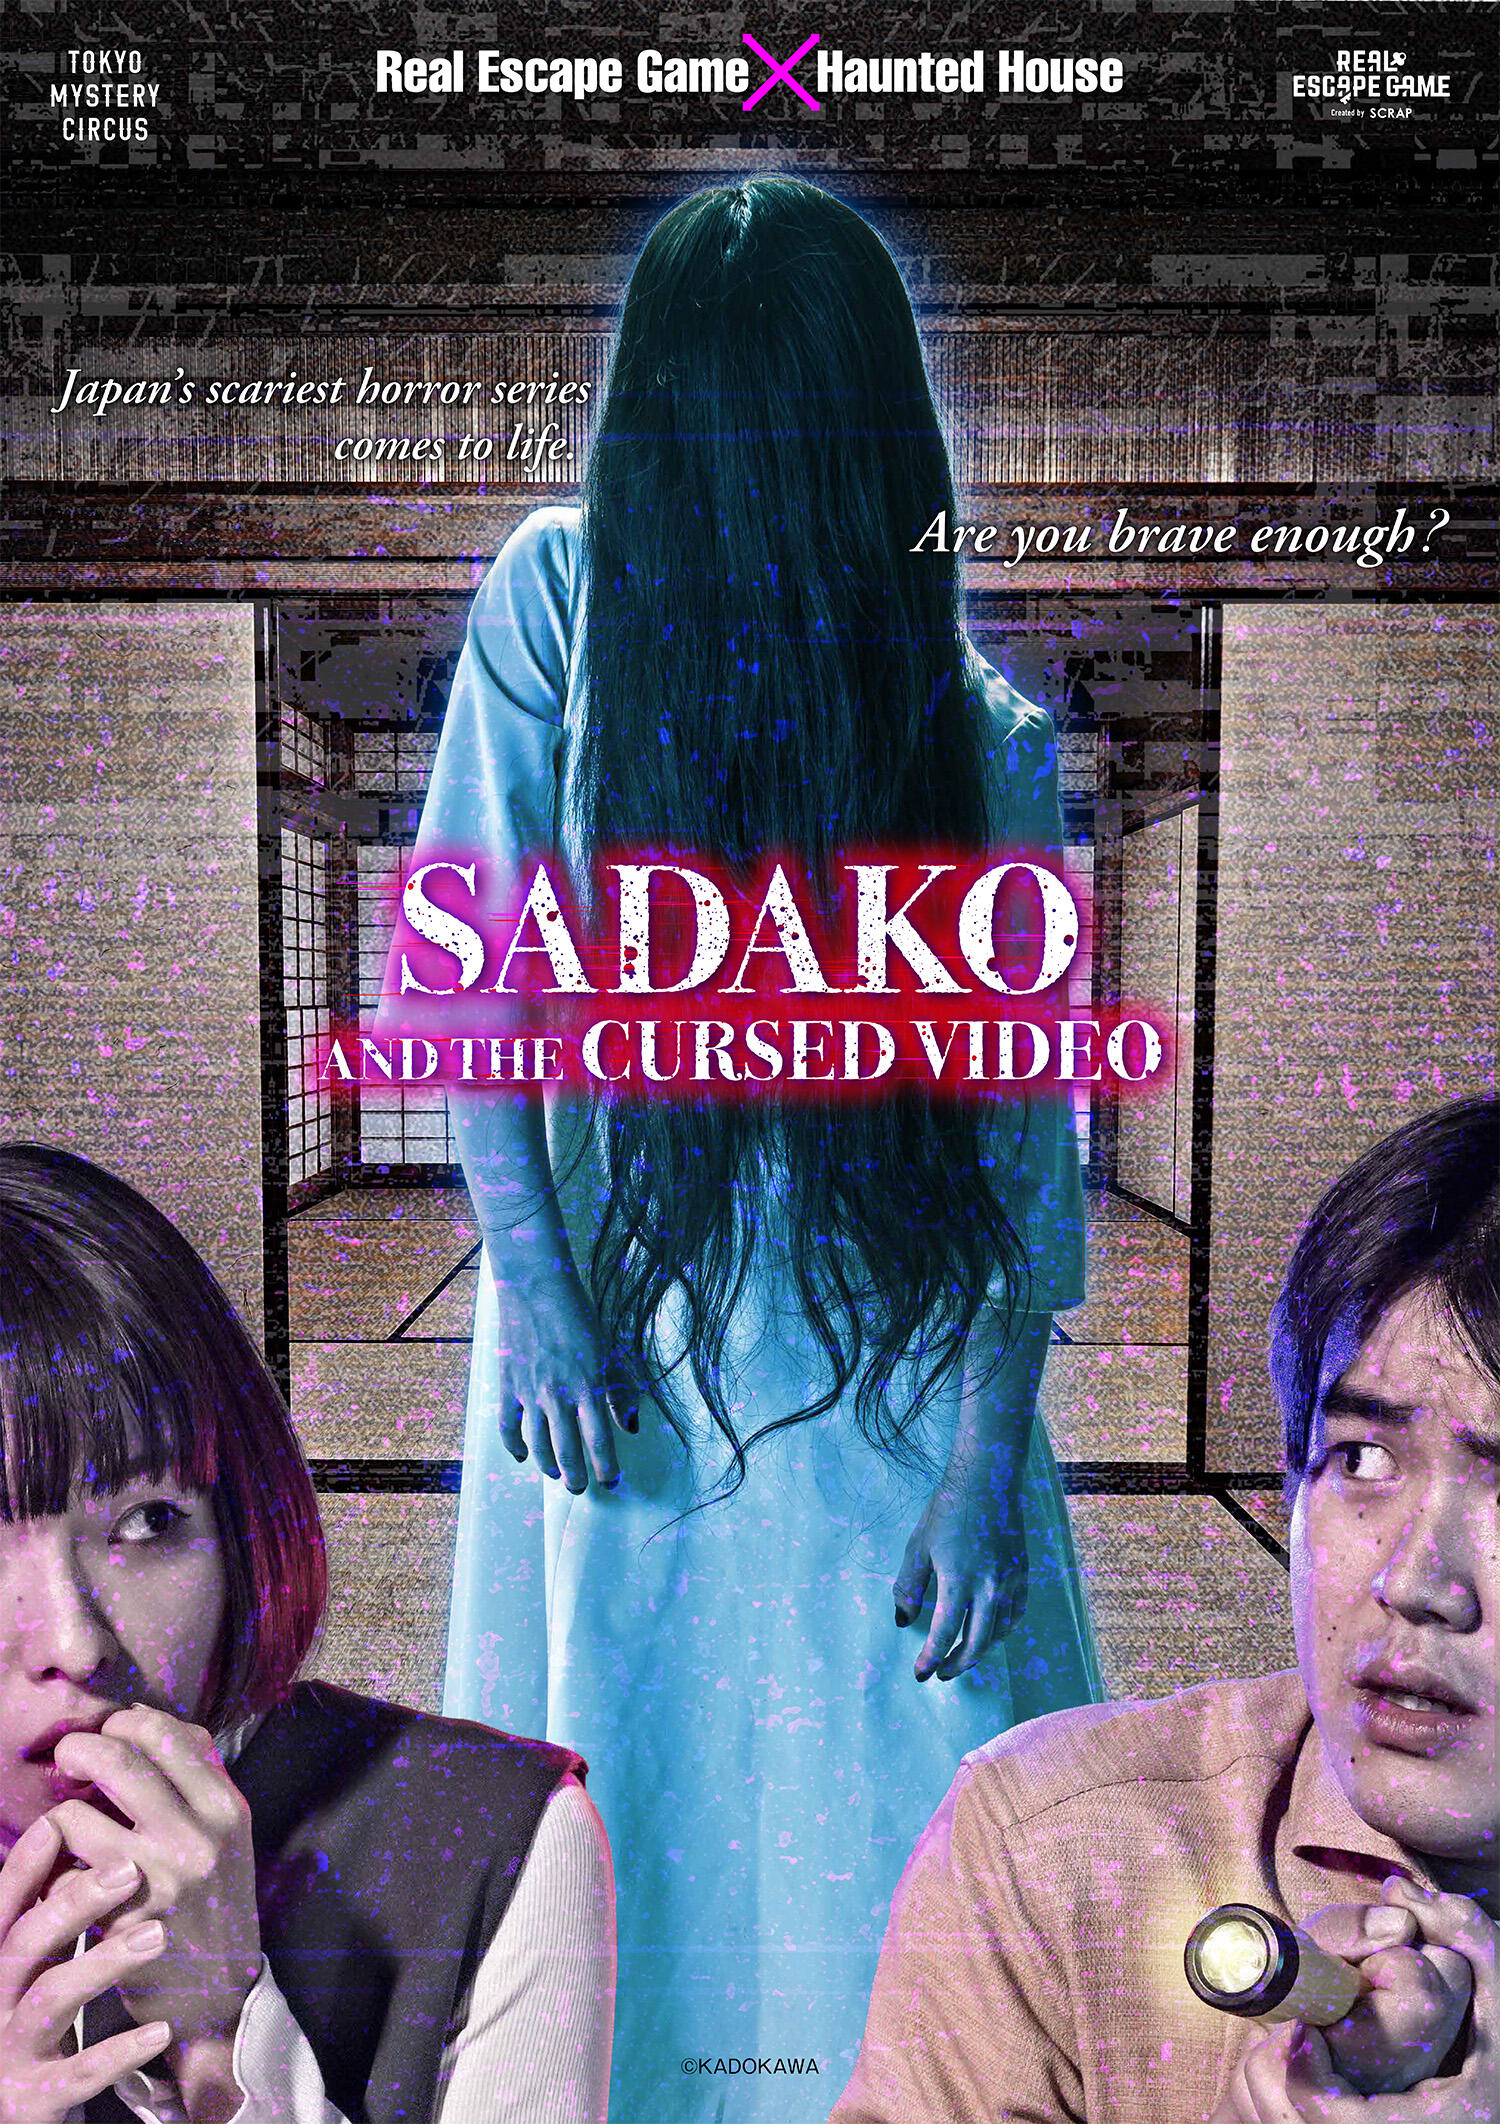 SADAKO and the Cursed Video